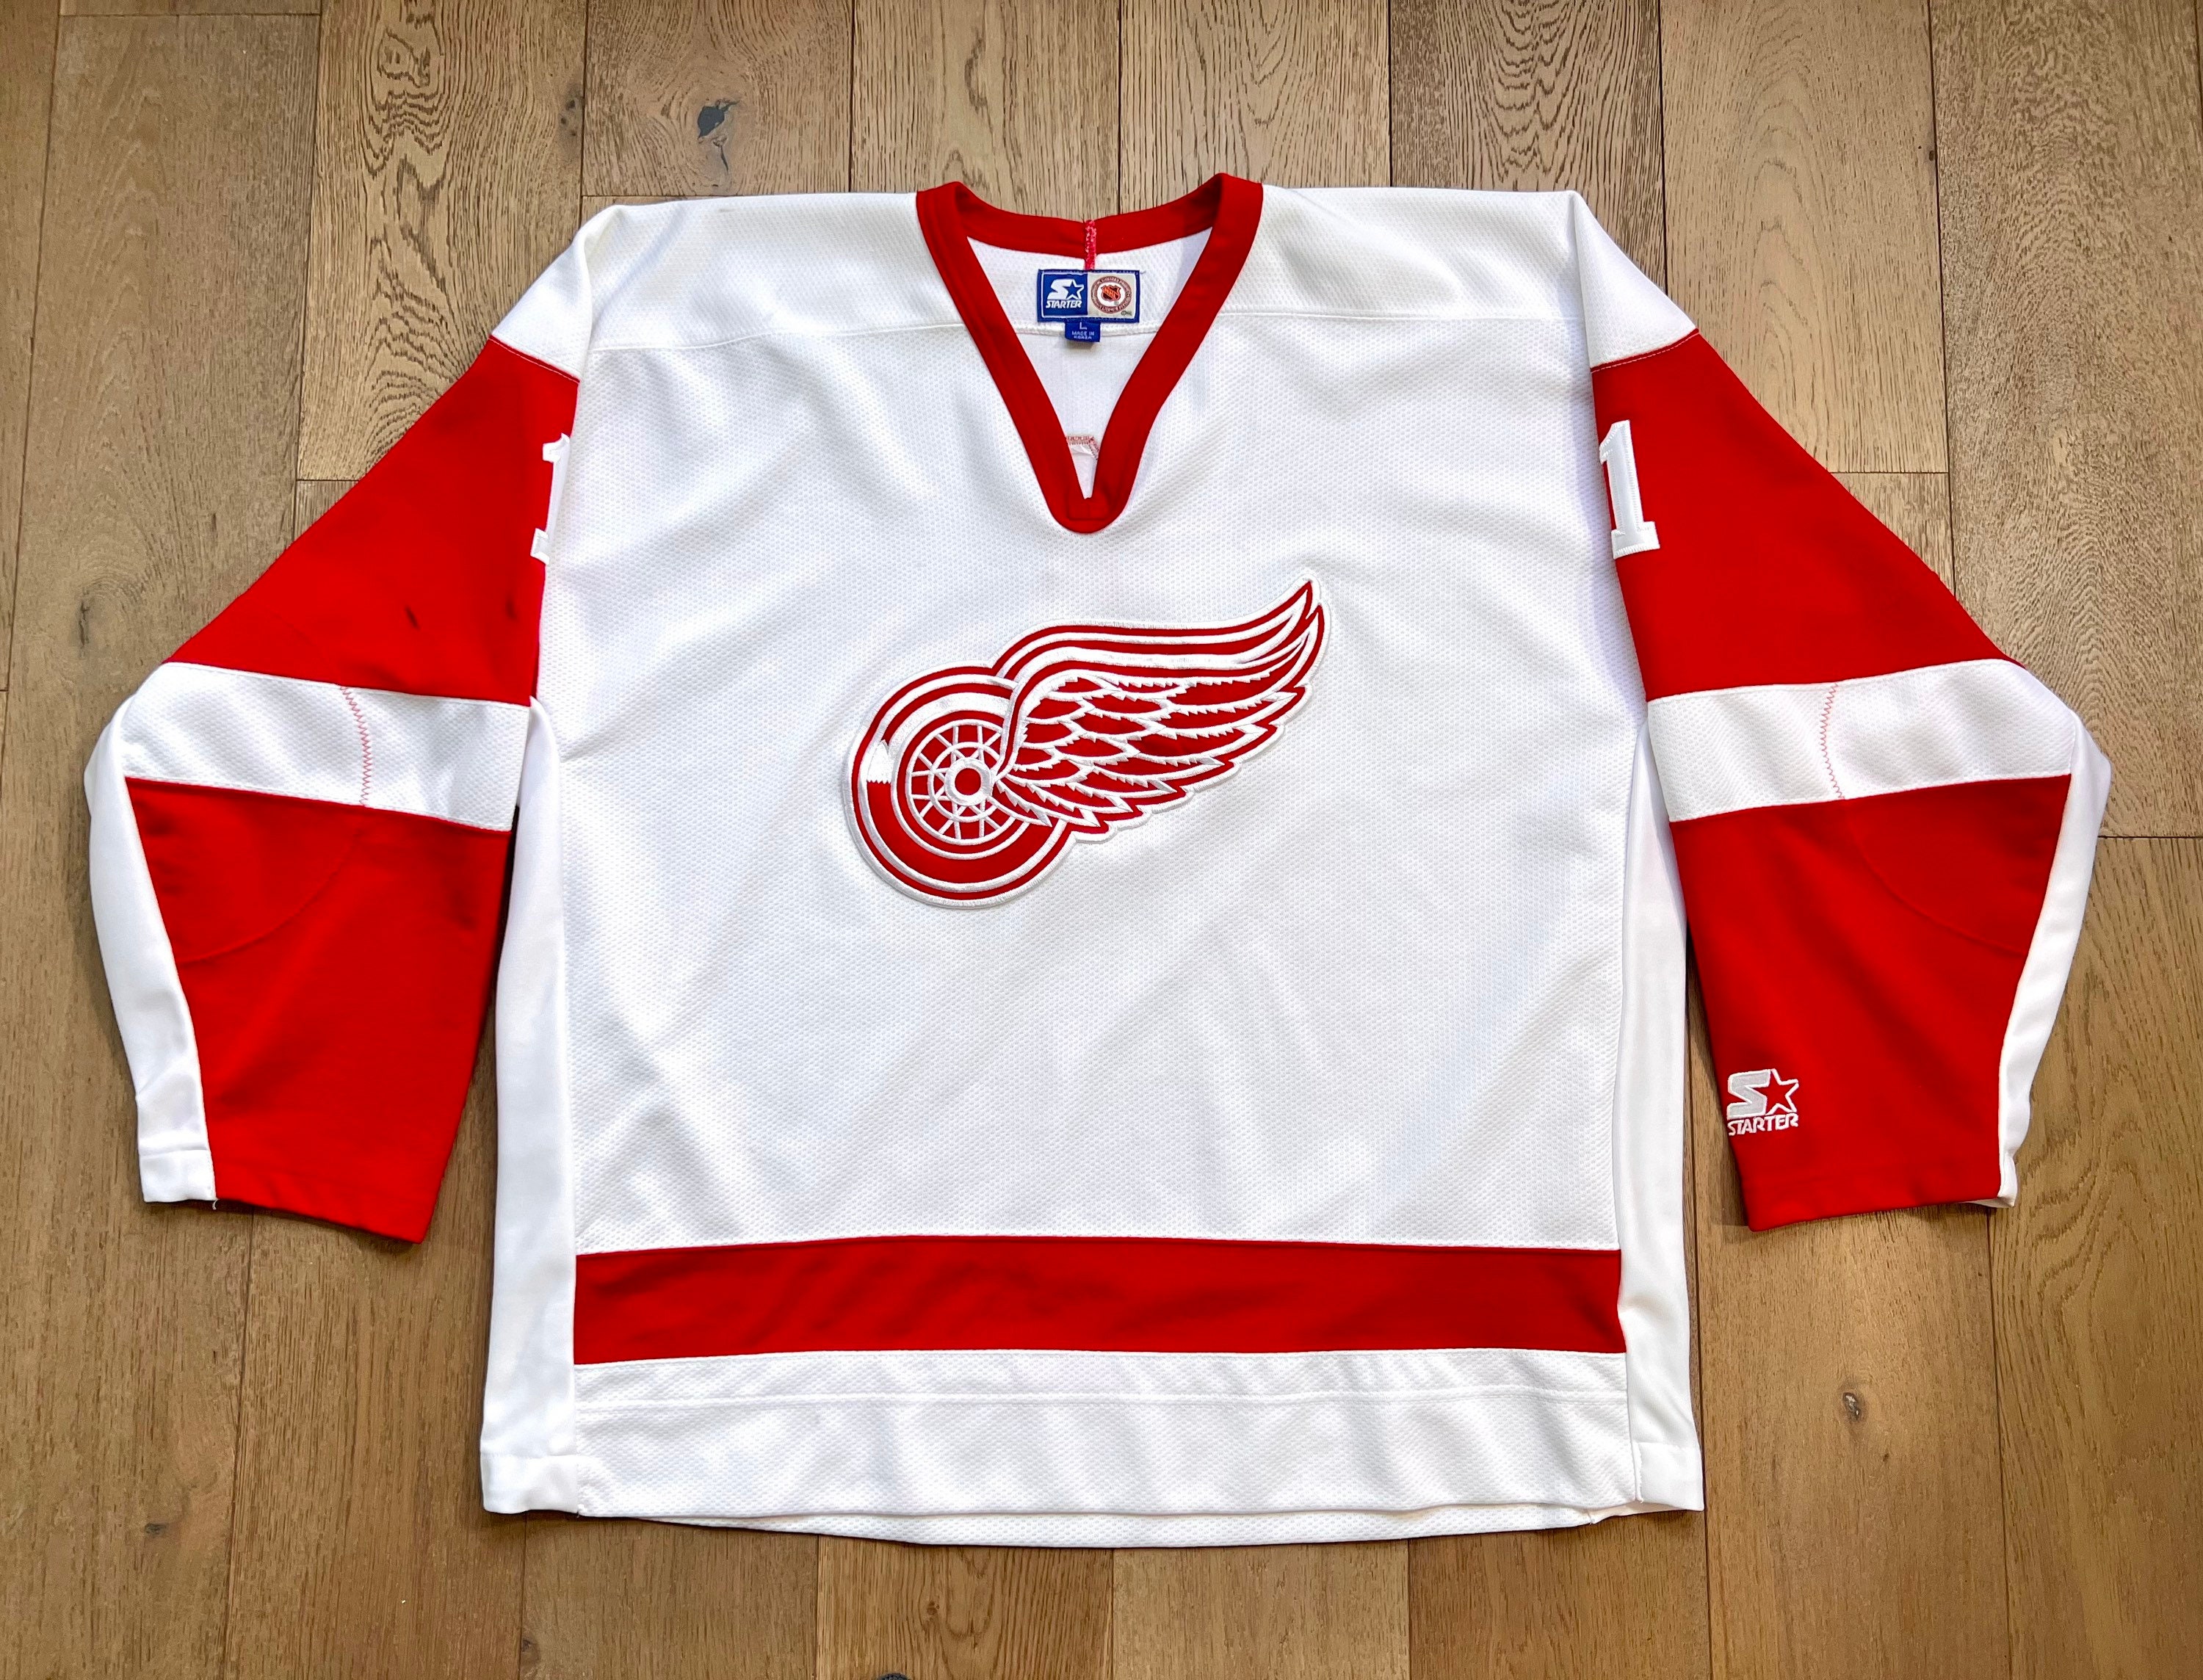 Found great deal on youth Datsyuk jersey : r/hockeyjerseys